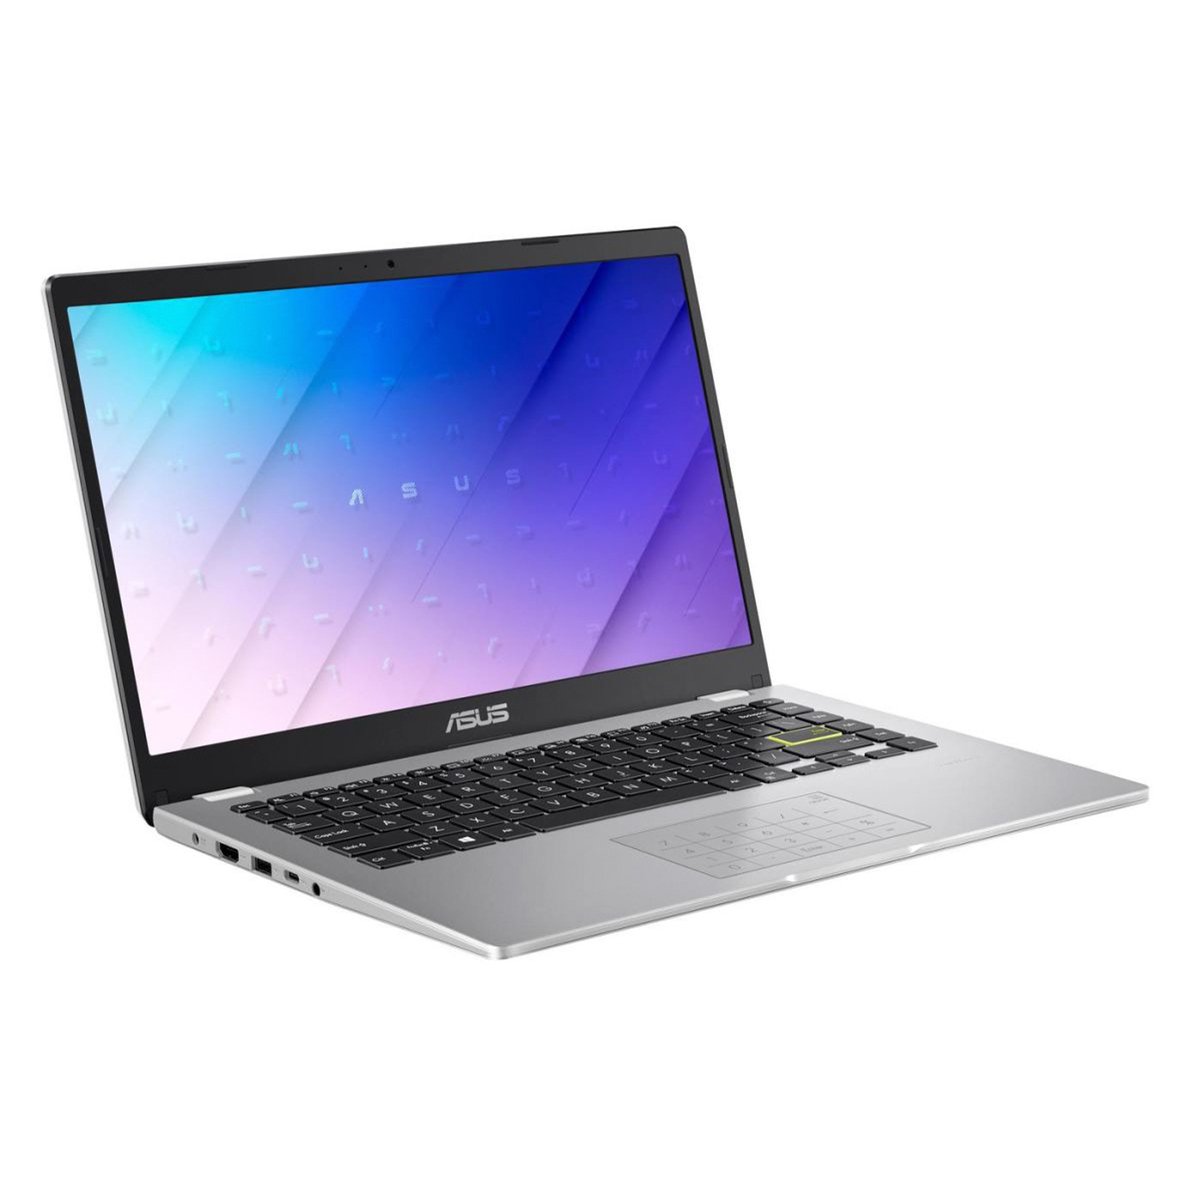 Asus Notebook E410MA-EK047T,Intel Celeron N4020,4GB RAM,512GB SSD,Intel UHD Graphics 600,14" HD WXGA LED Display,Windows 10,White